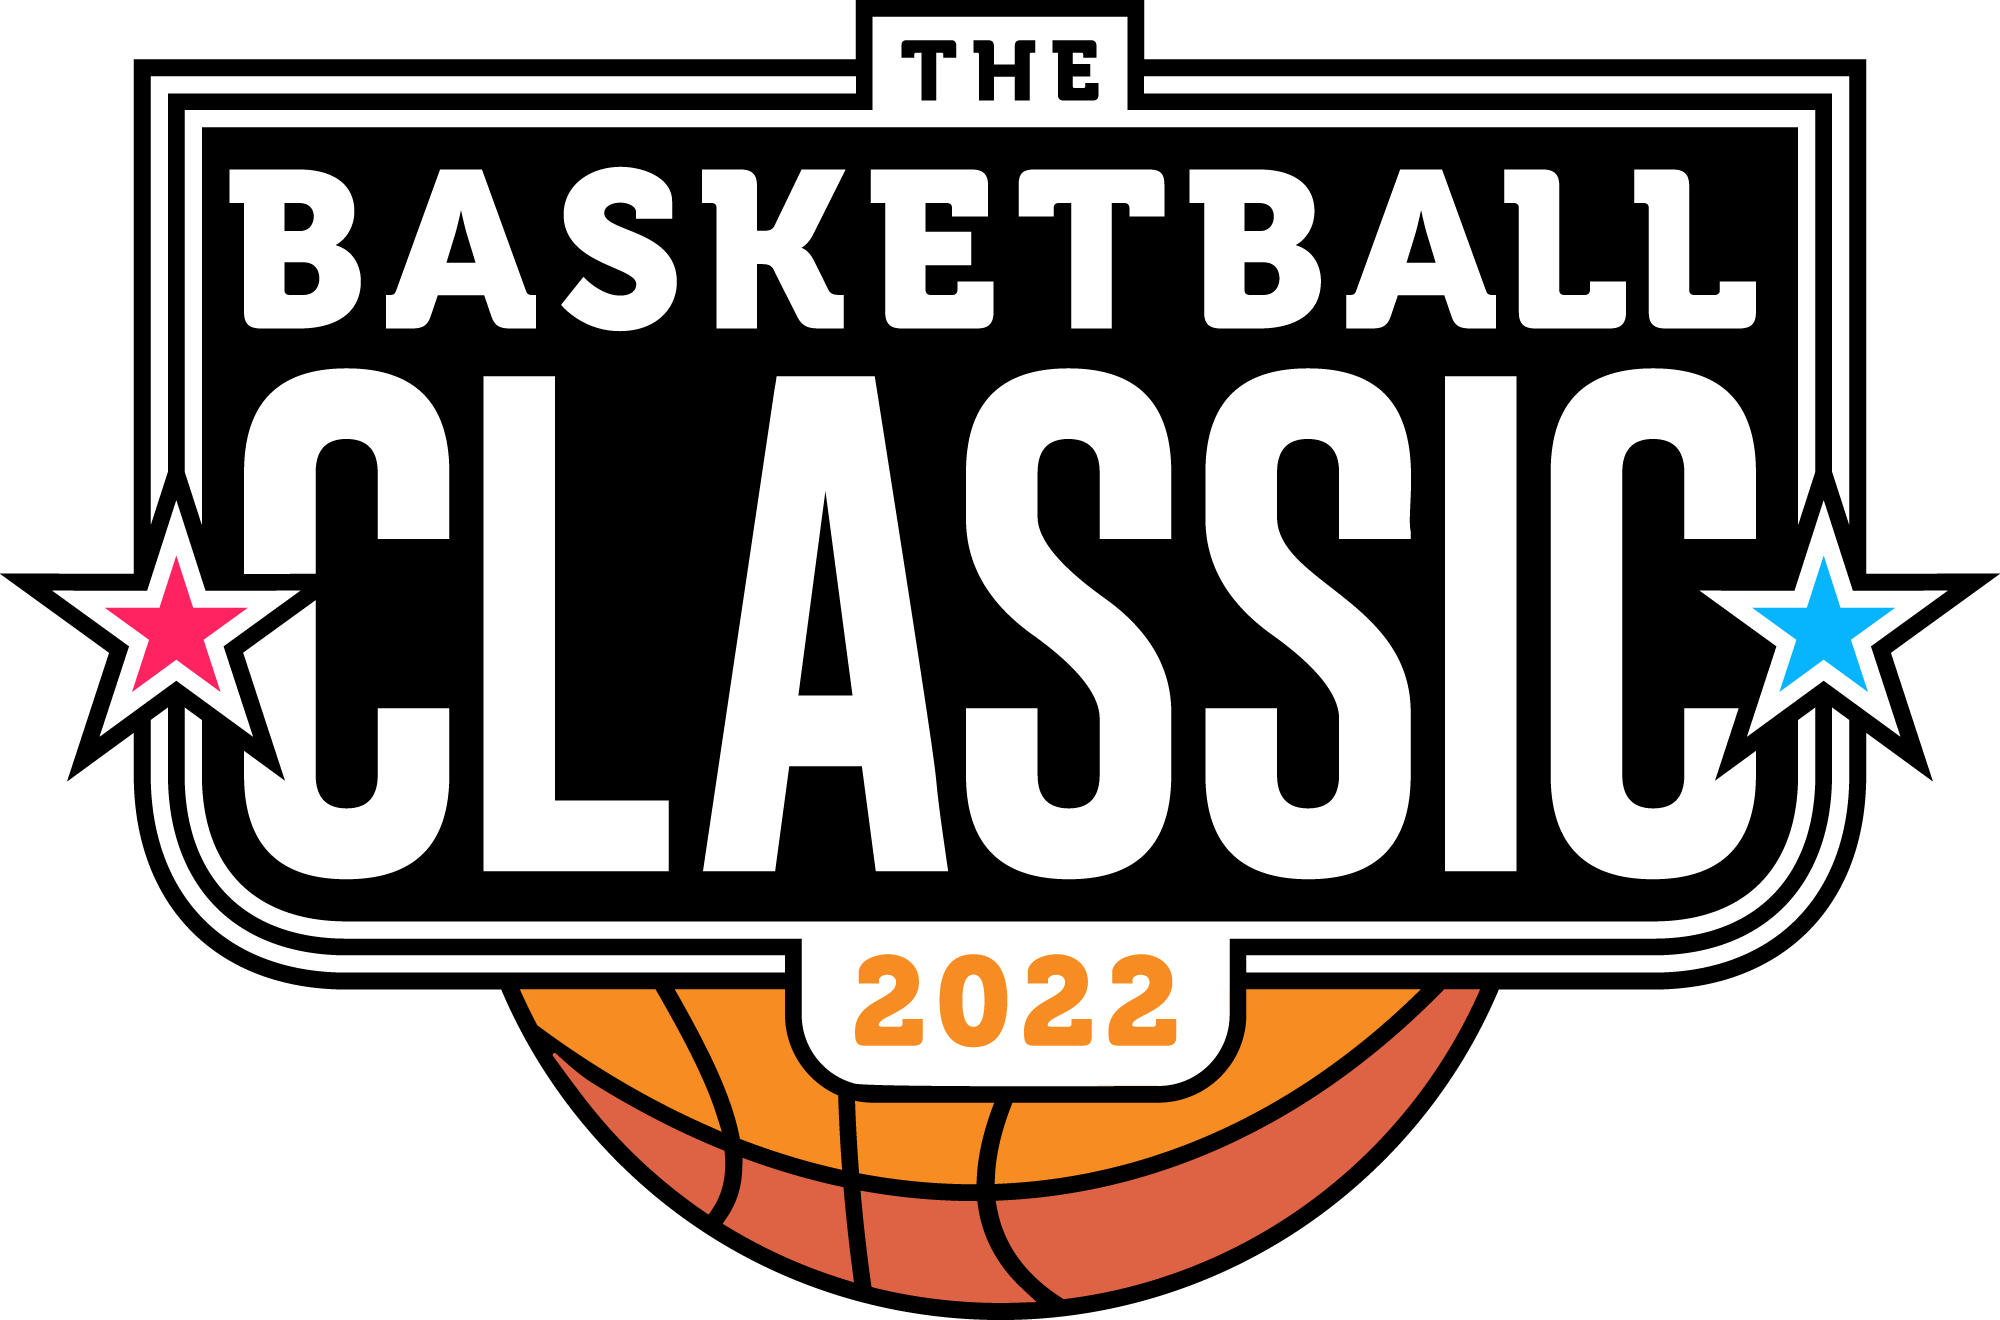 2022 The Basketball Classic Tournament